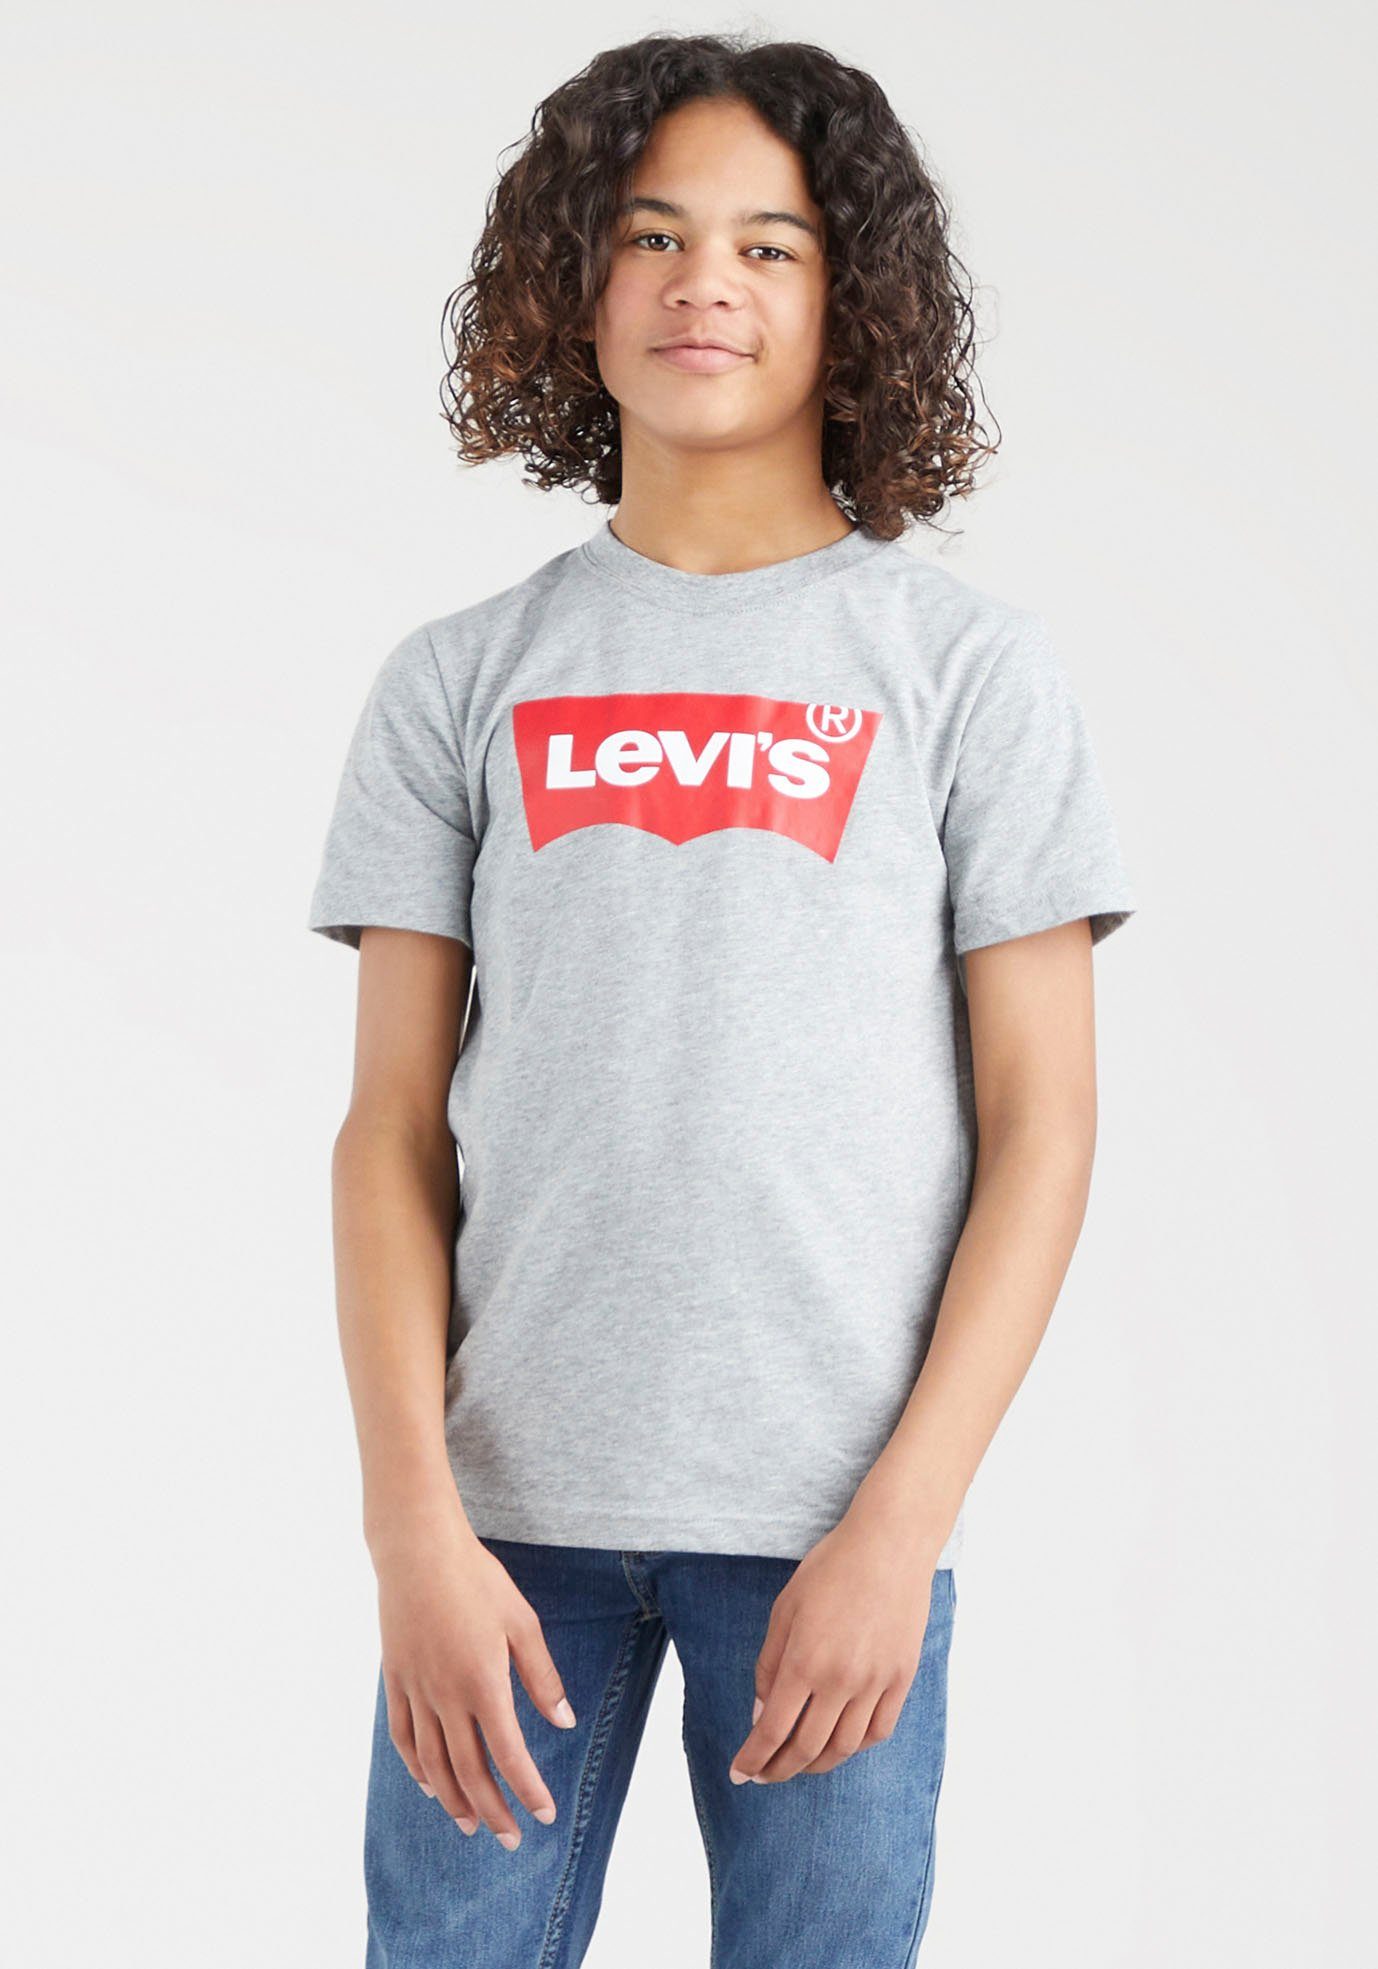 Levi's® for T-Shirt Kids hellgrau-meliert TEE BOYS LVB BATWING